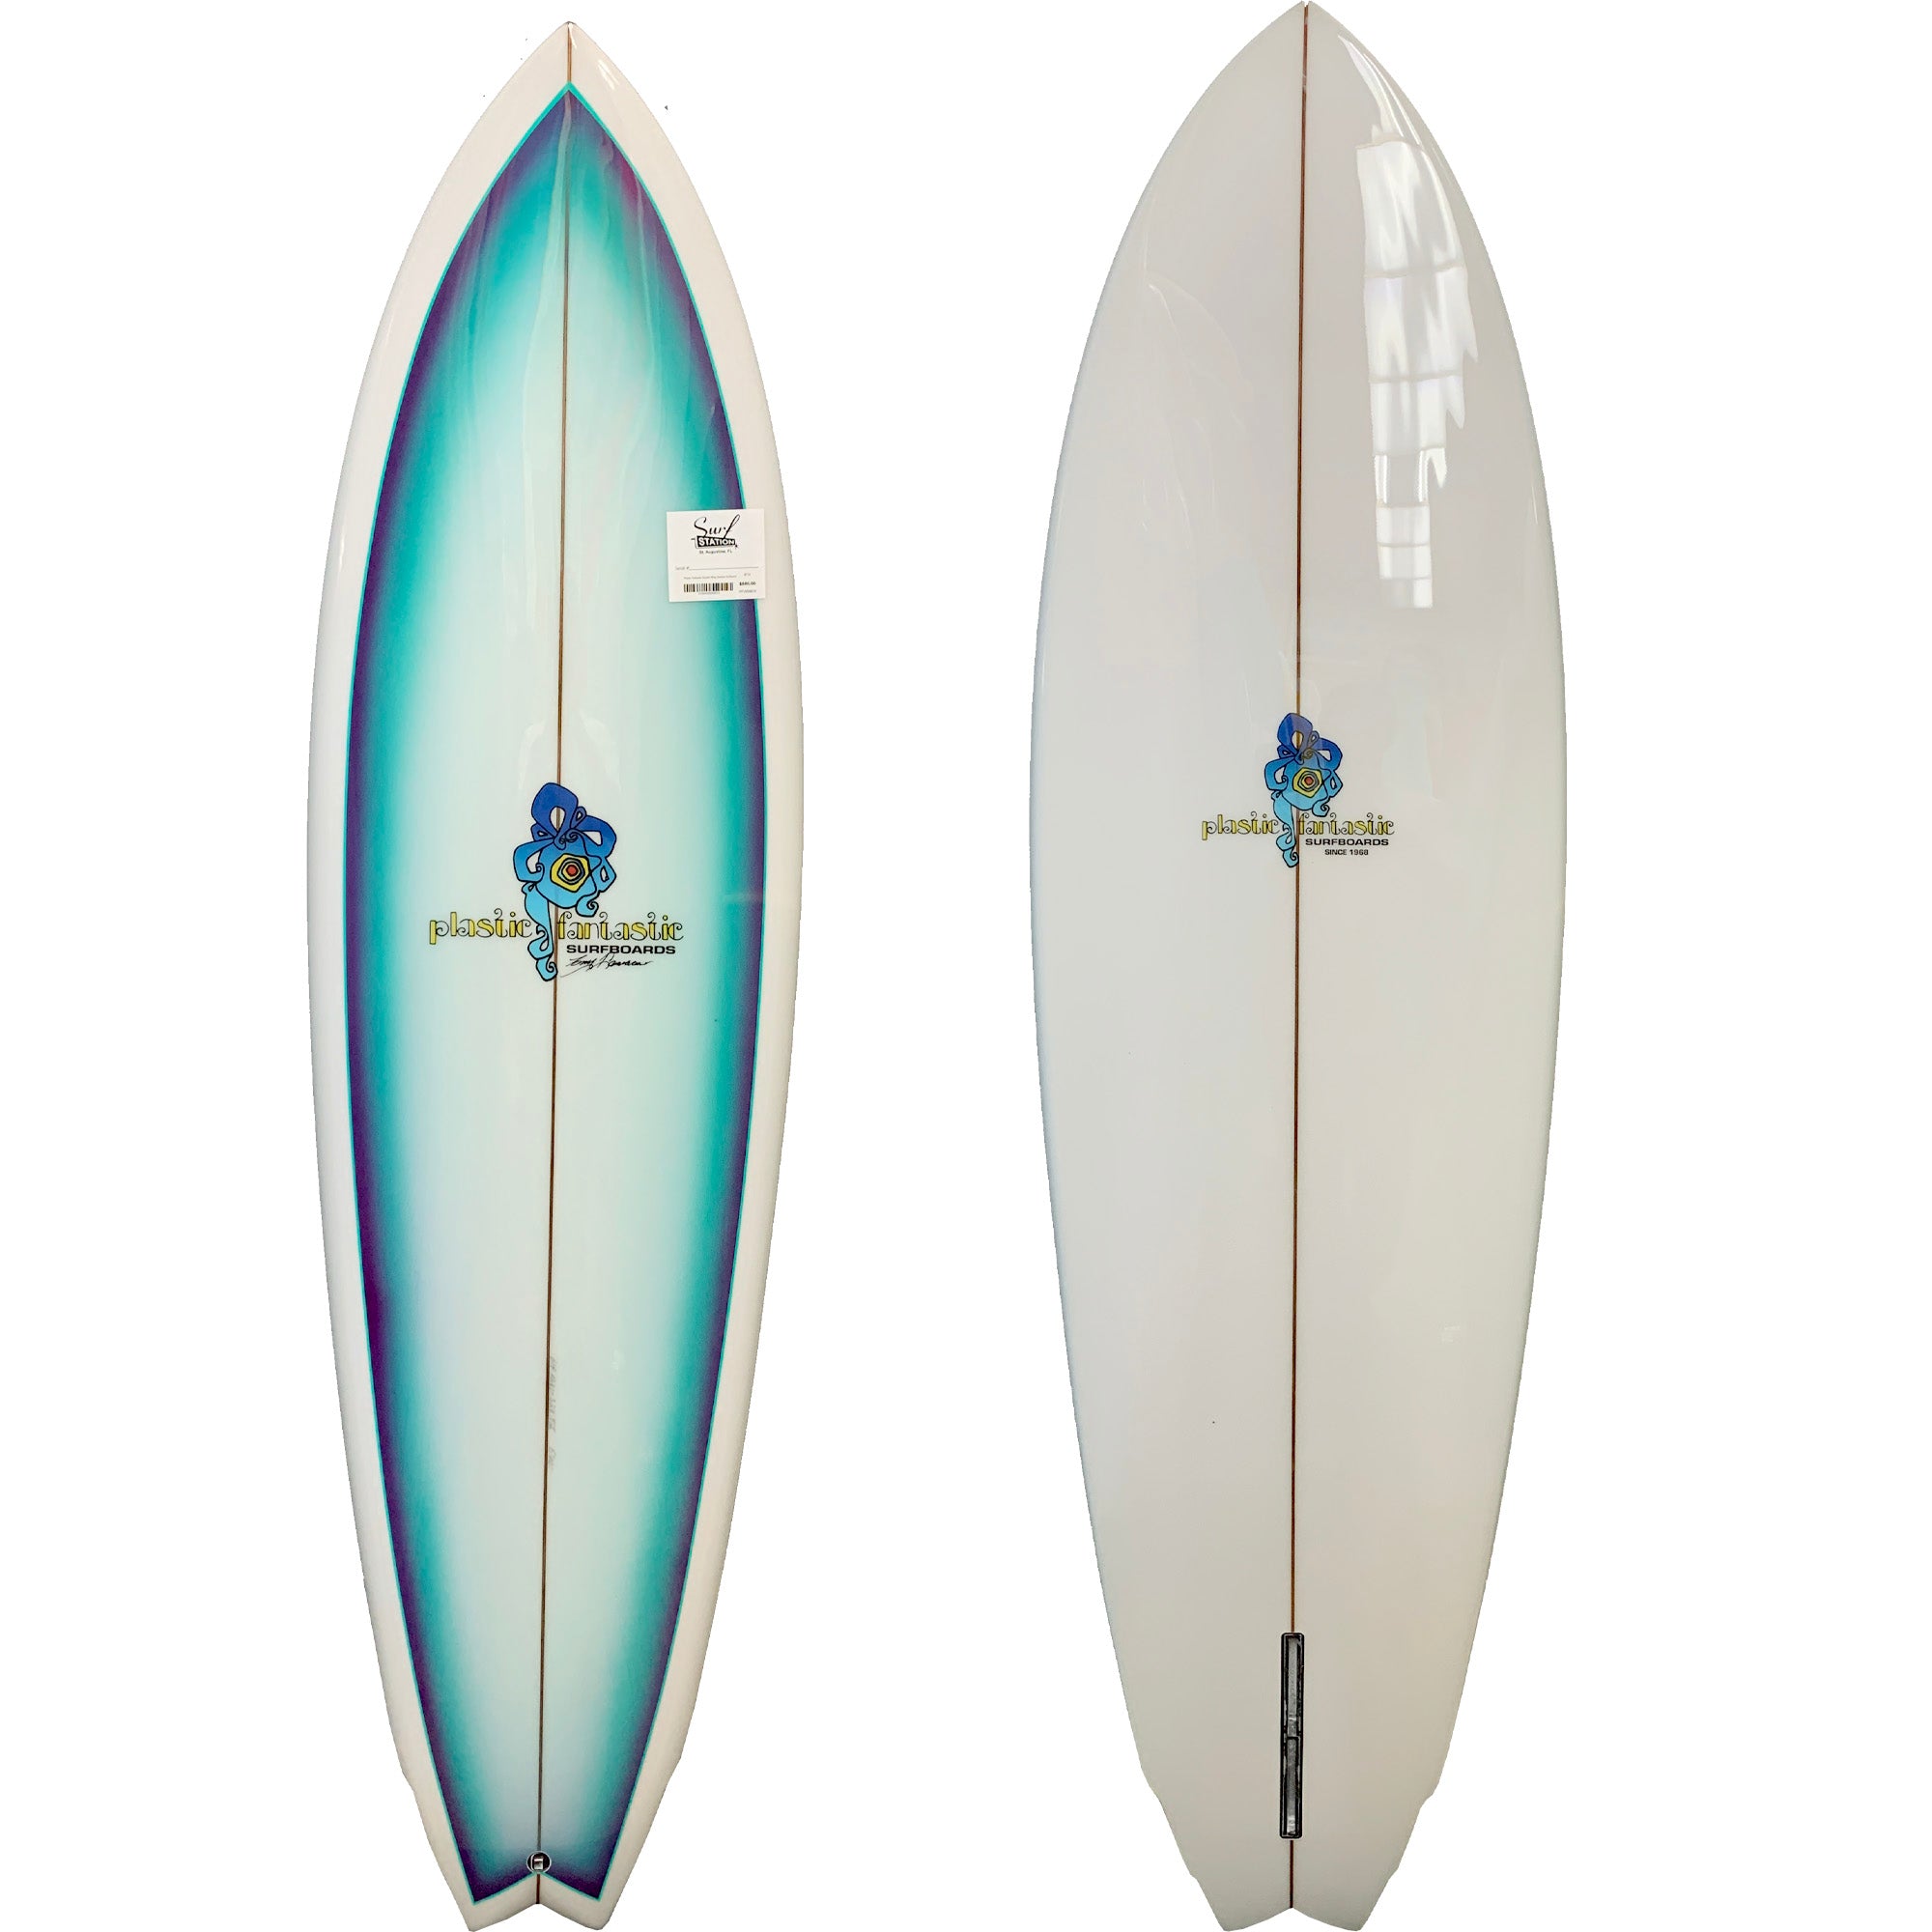 Plastic Fantastic Double Wing Swallow Surfboard